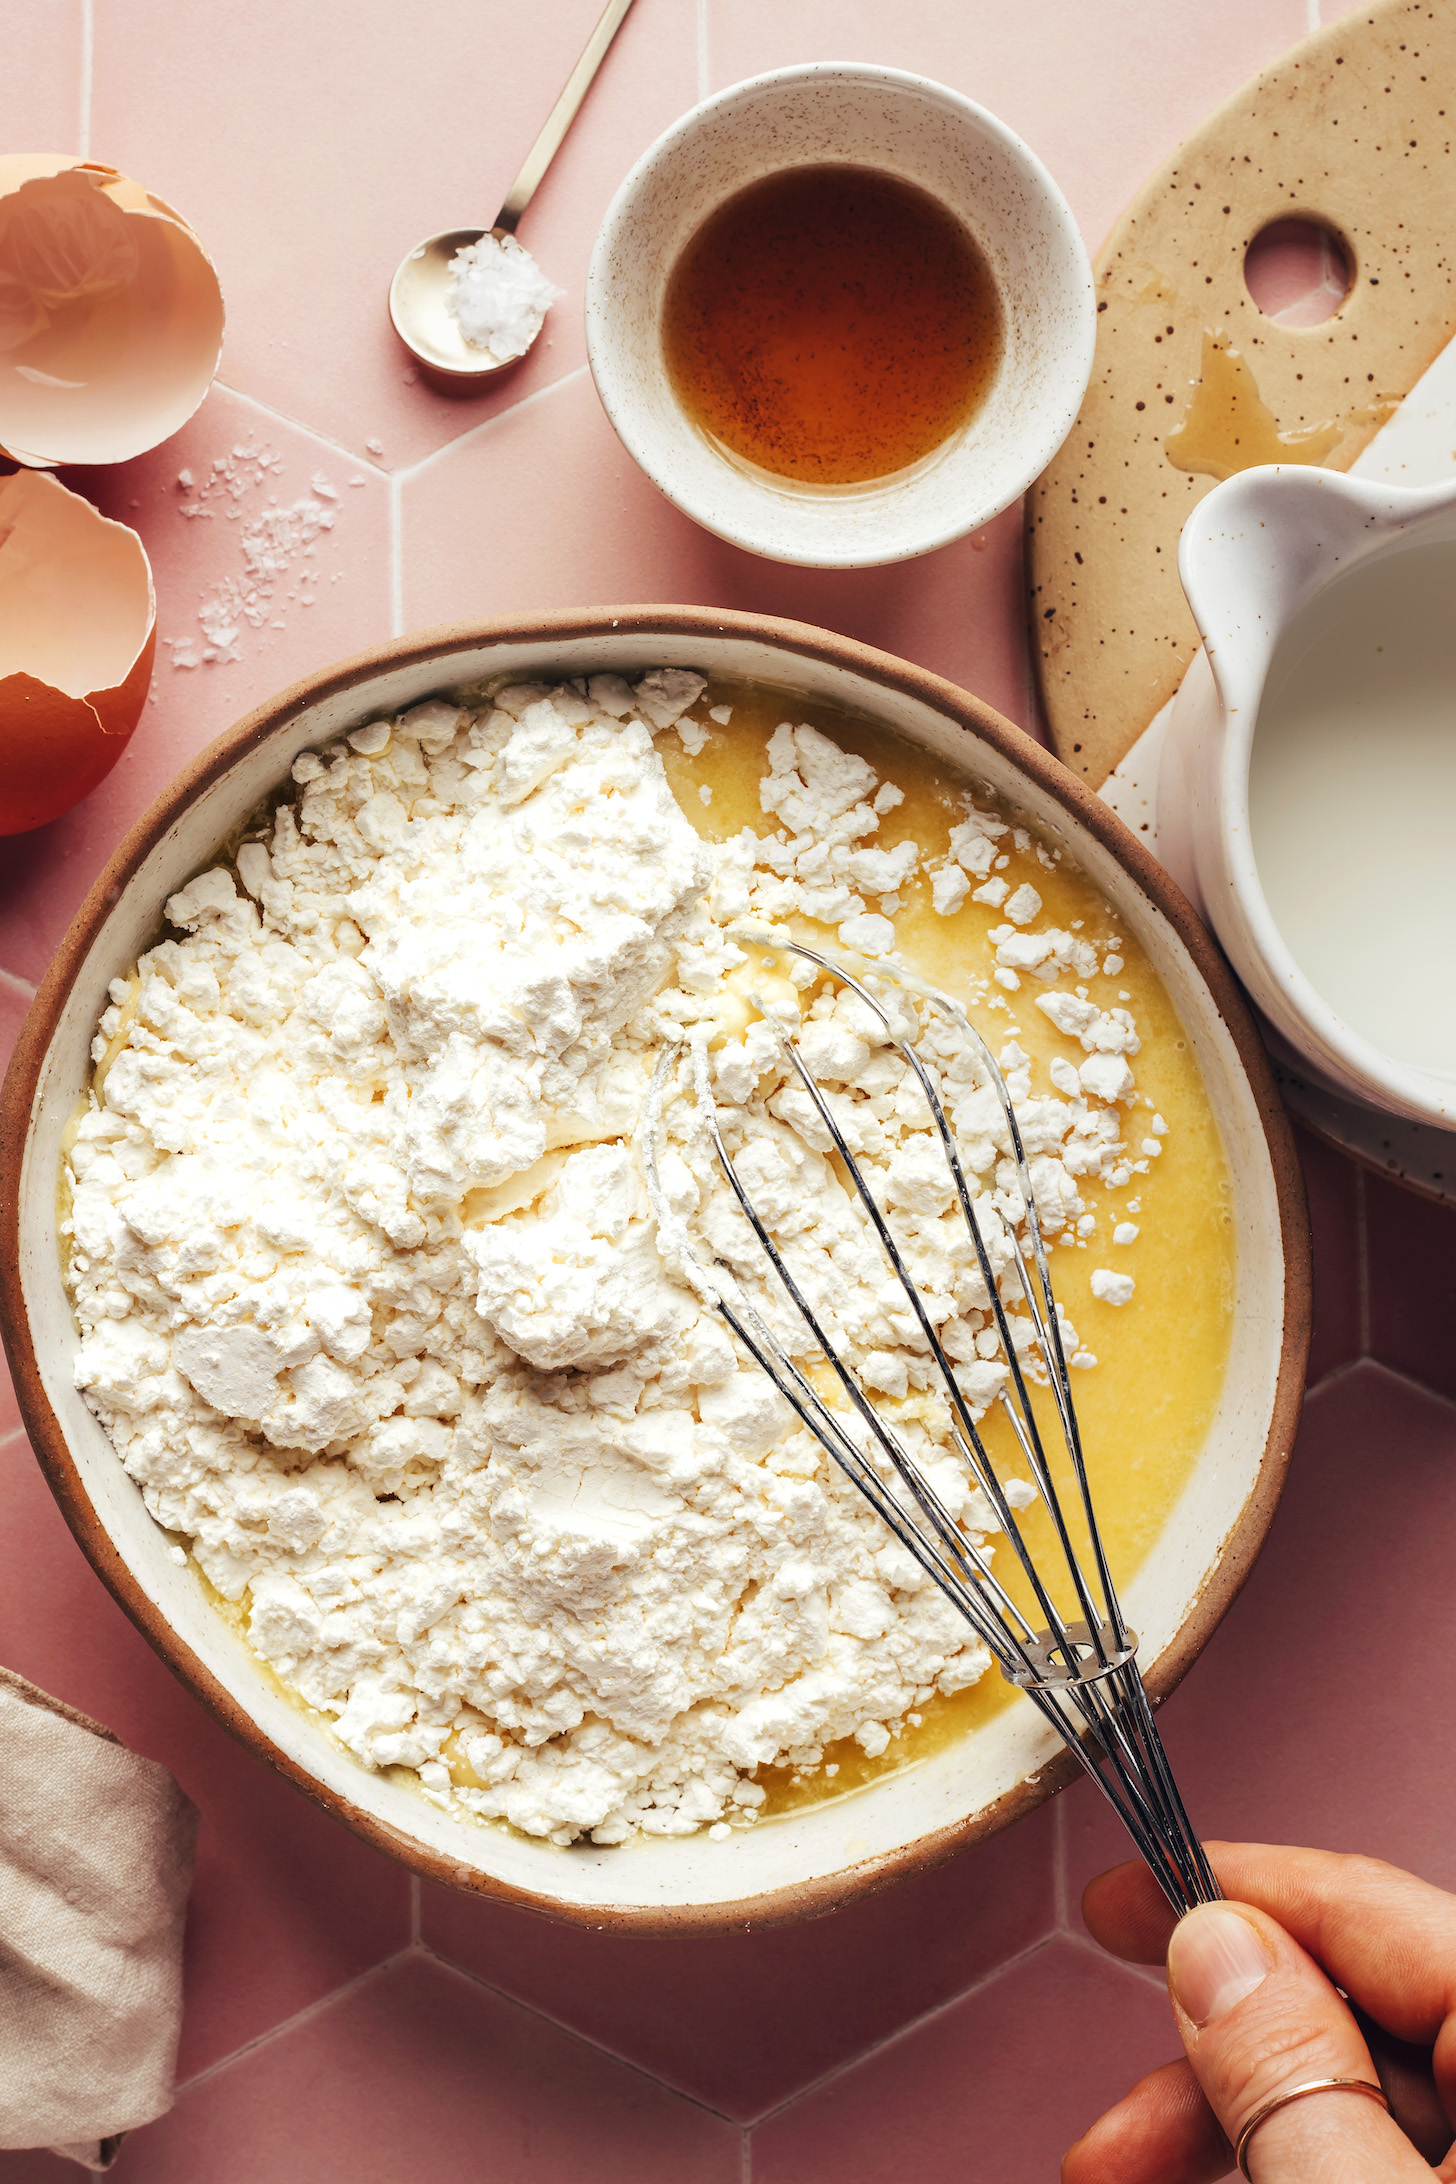 Whisking gluten-free flour into the wet ingredients